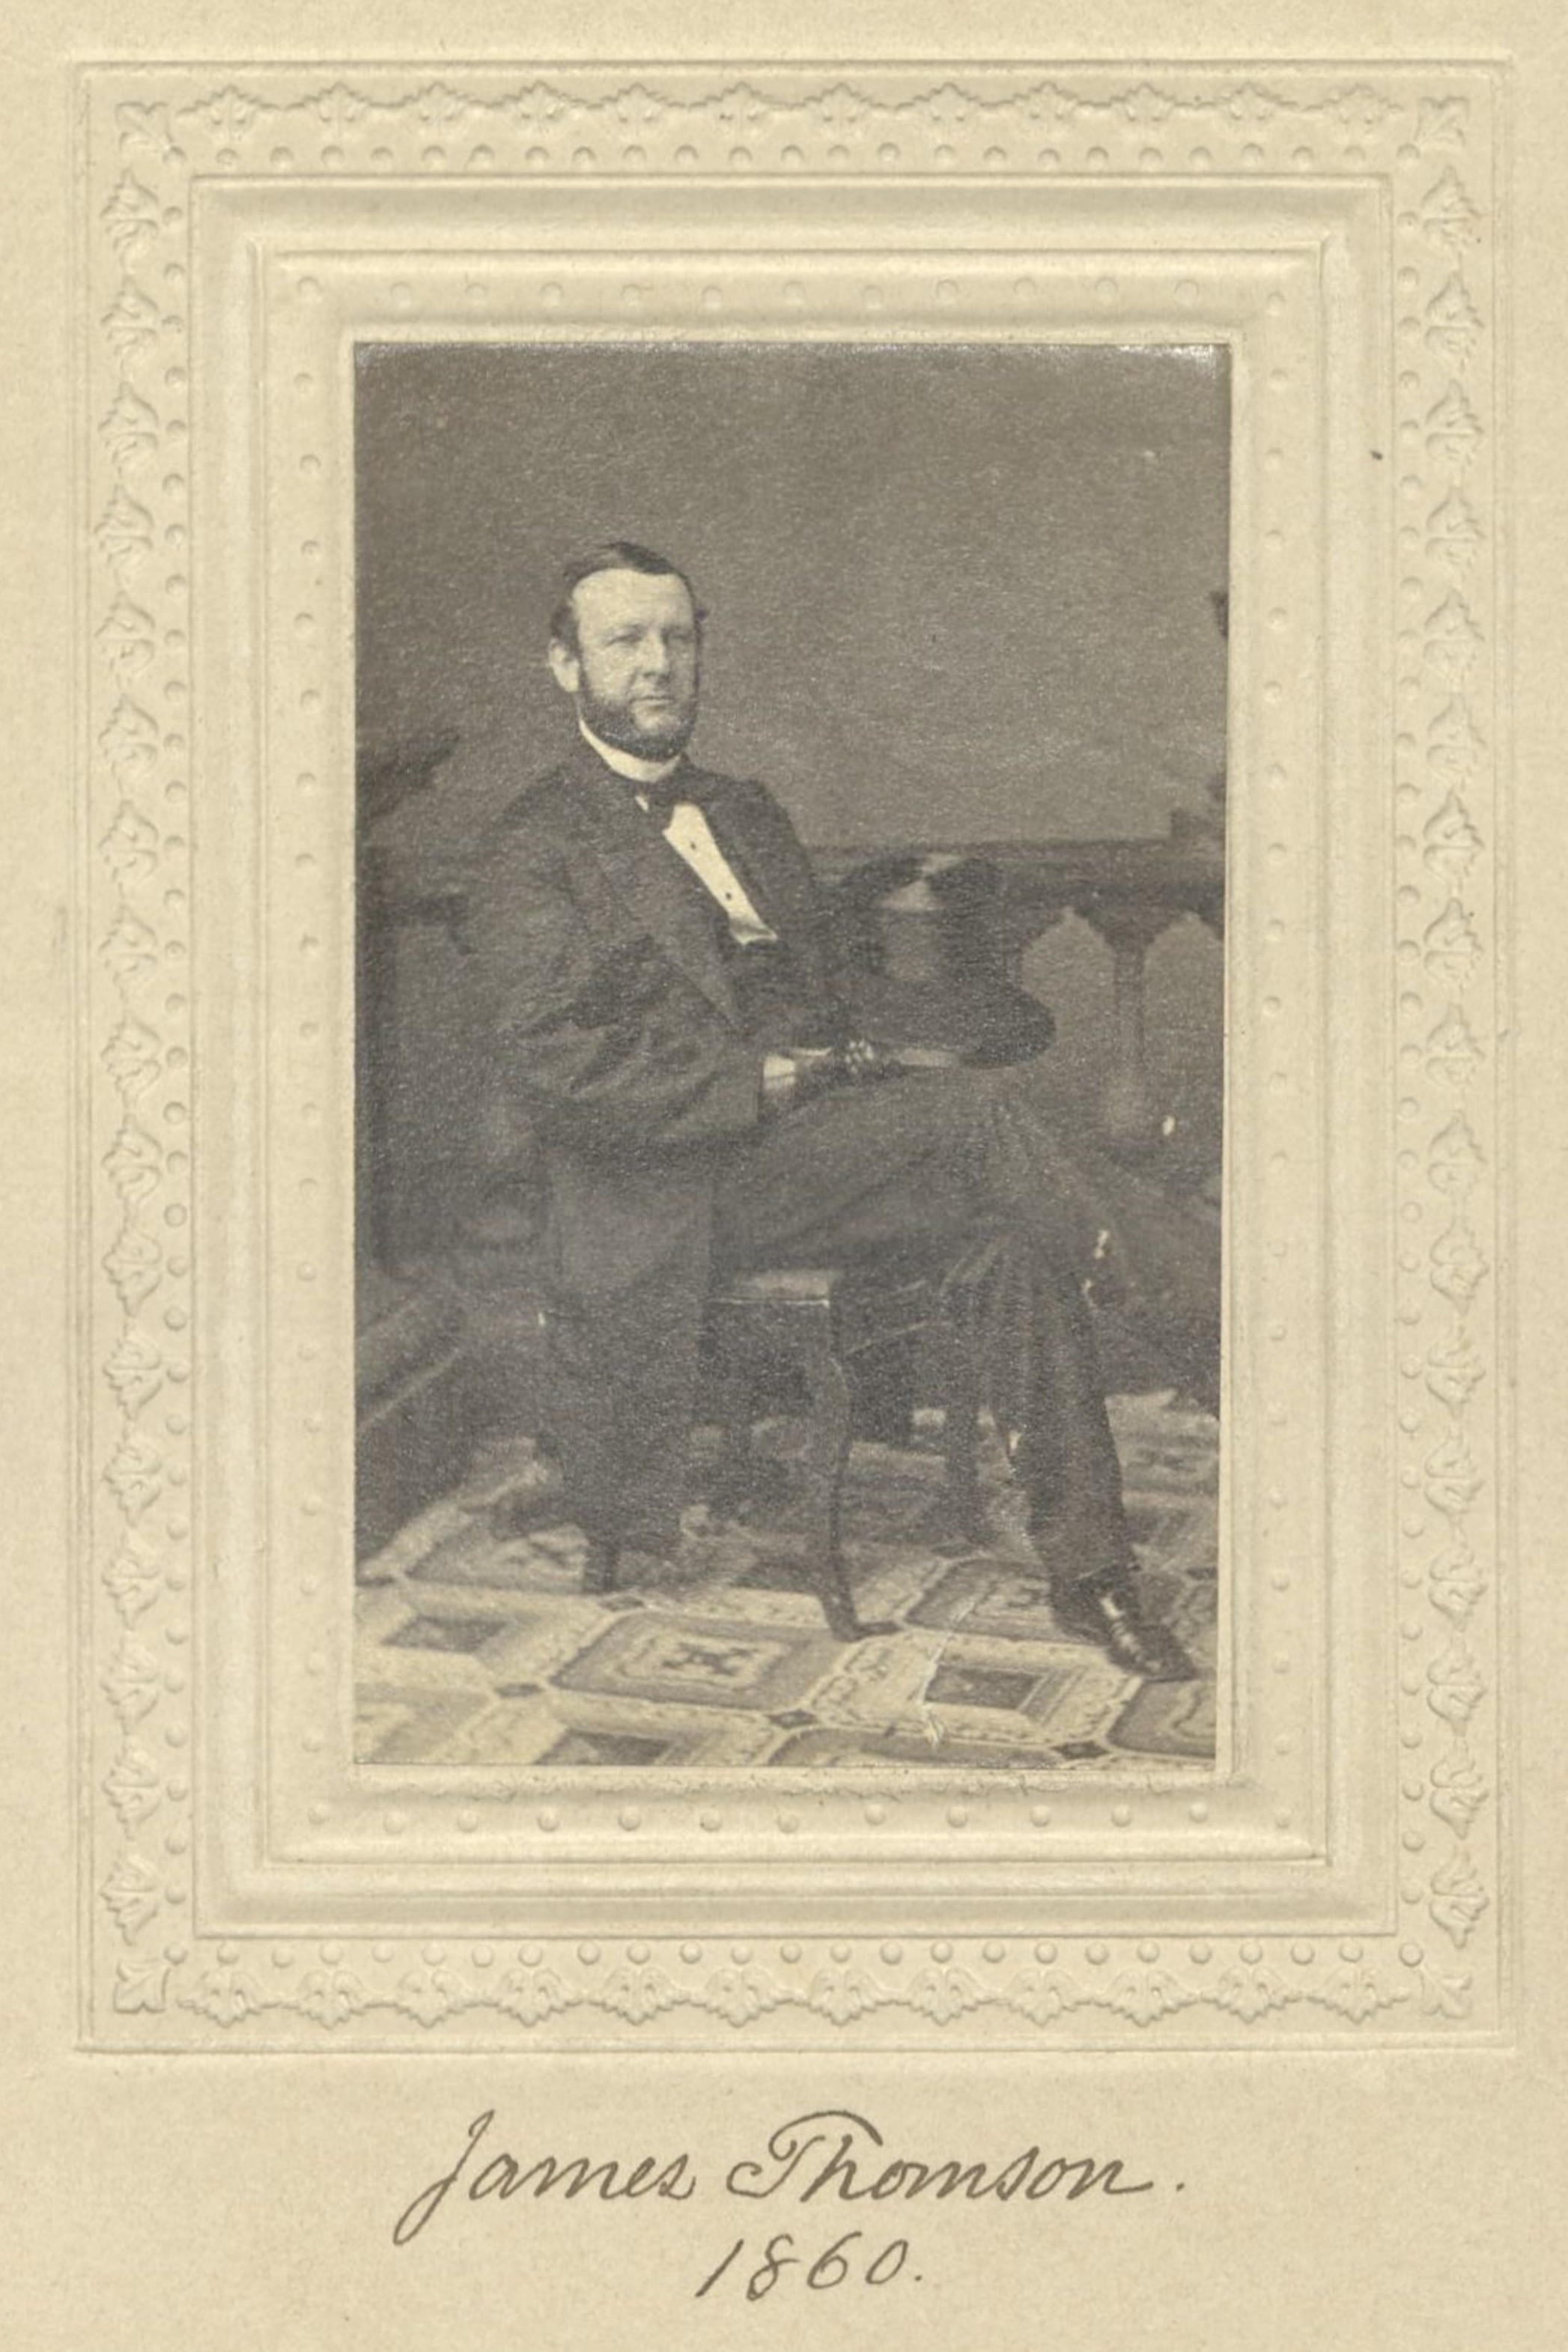 Member portrait of James Thomson